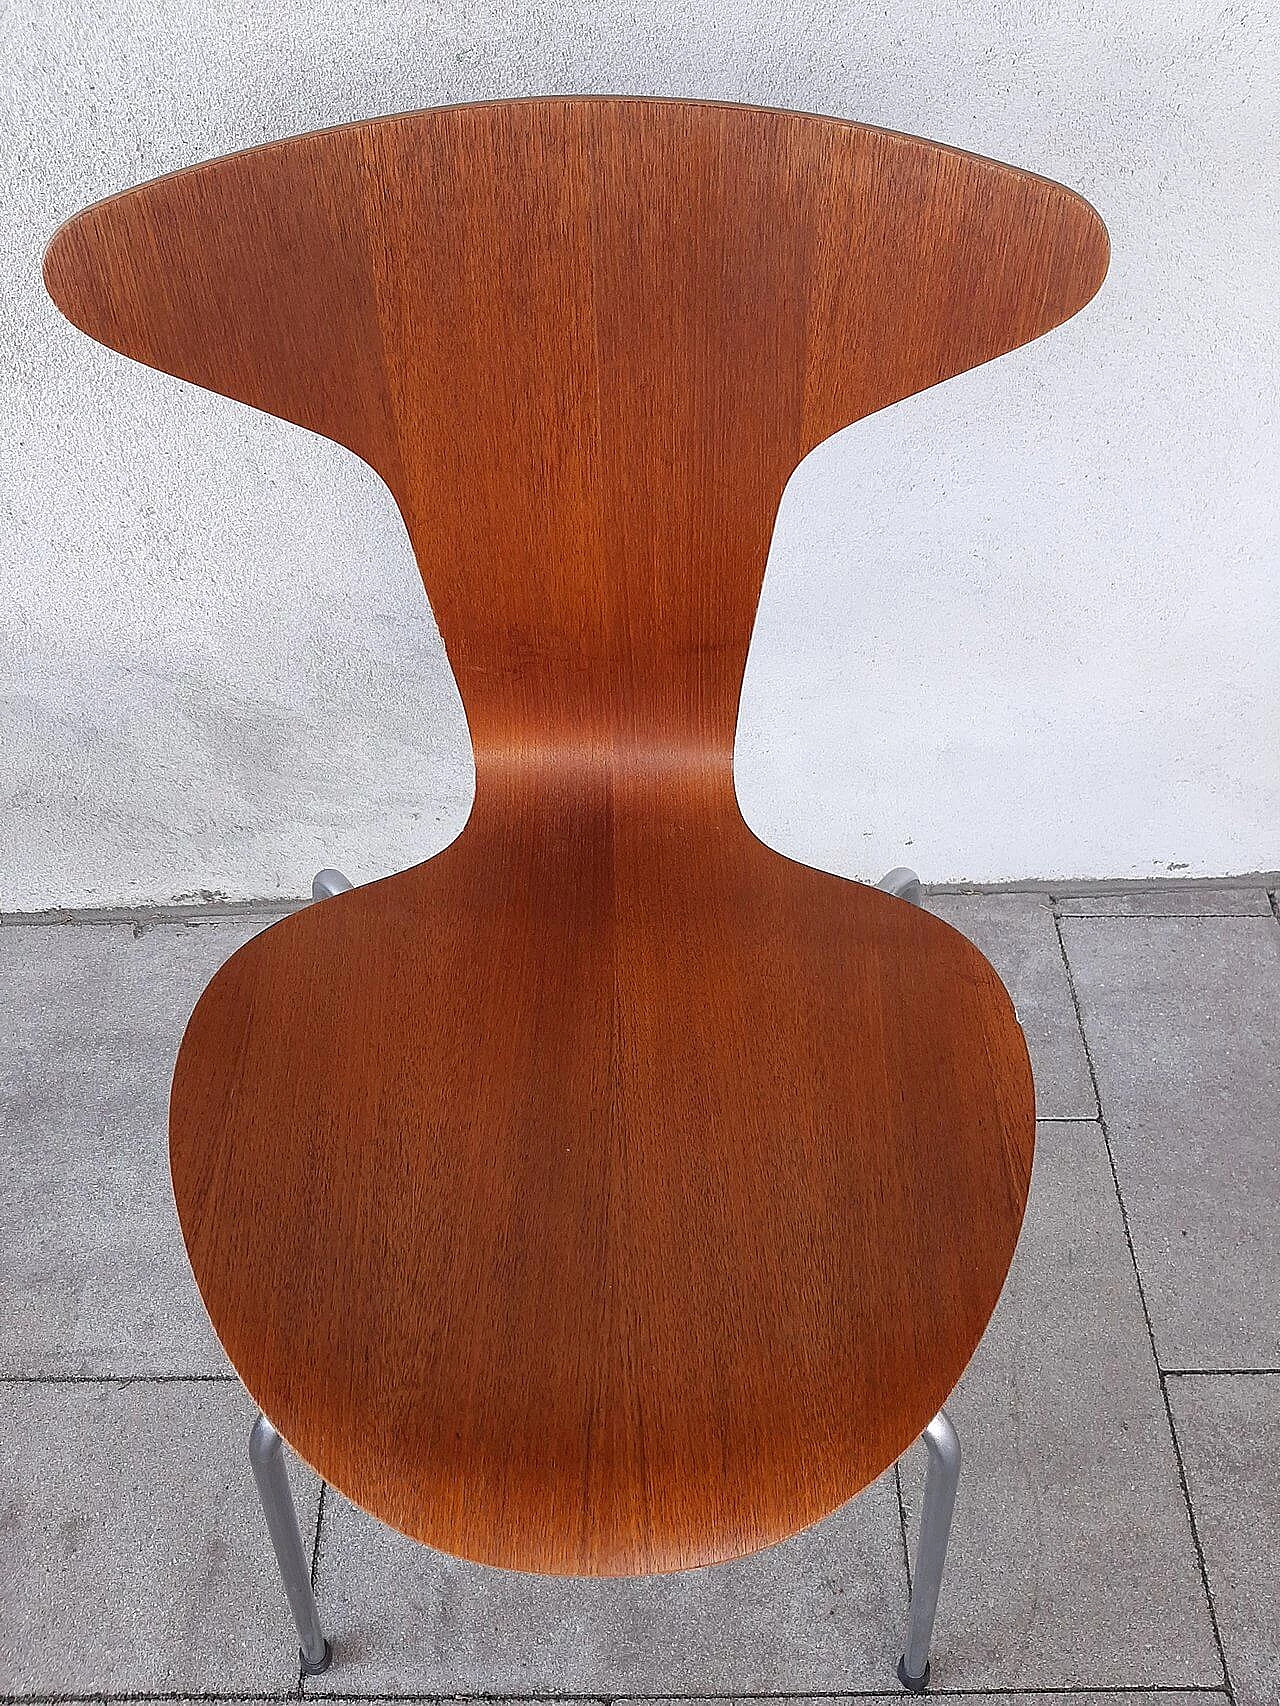 6 Chairs 3105 by Arne Jacobsen for Fritz Hansen, 1967 16